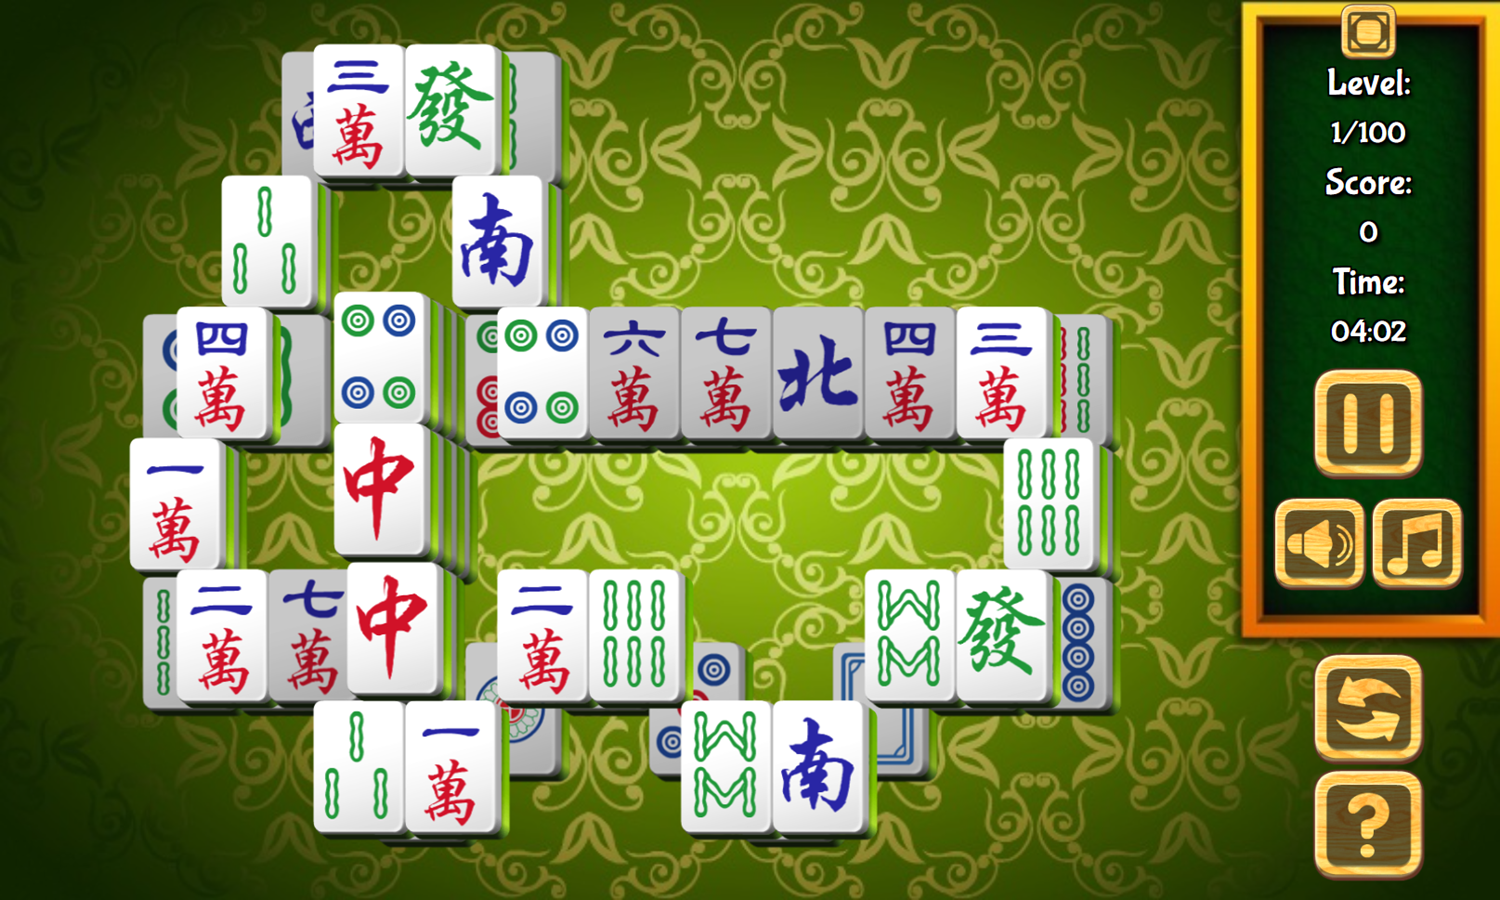 Mahjong Tiles Game Level Start Screenshot.